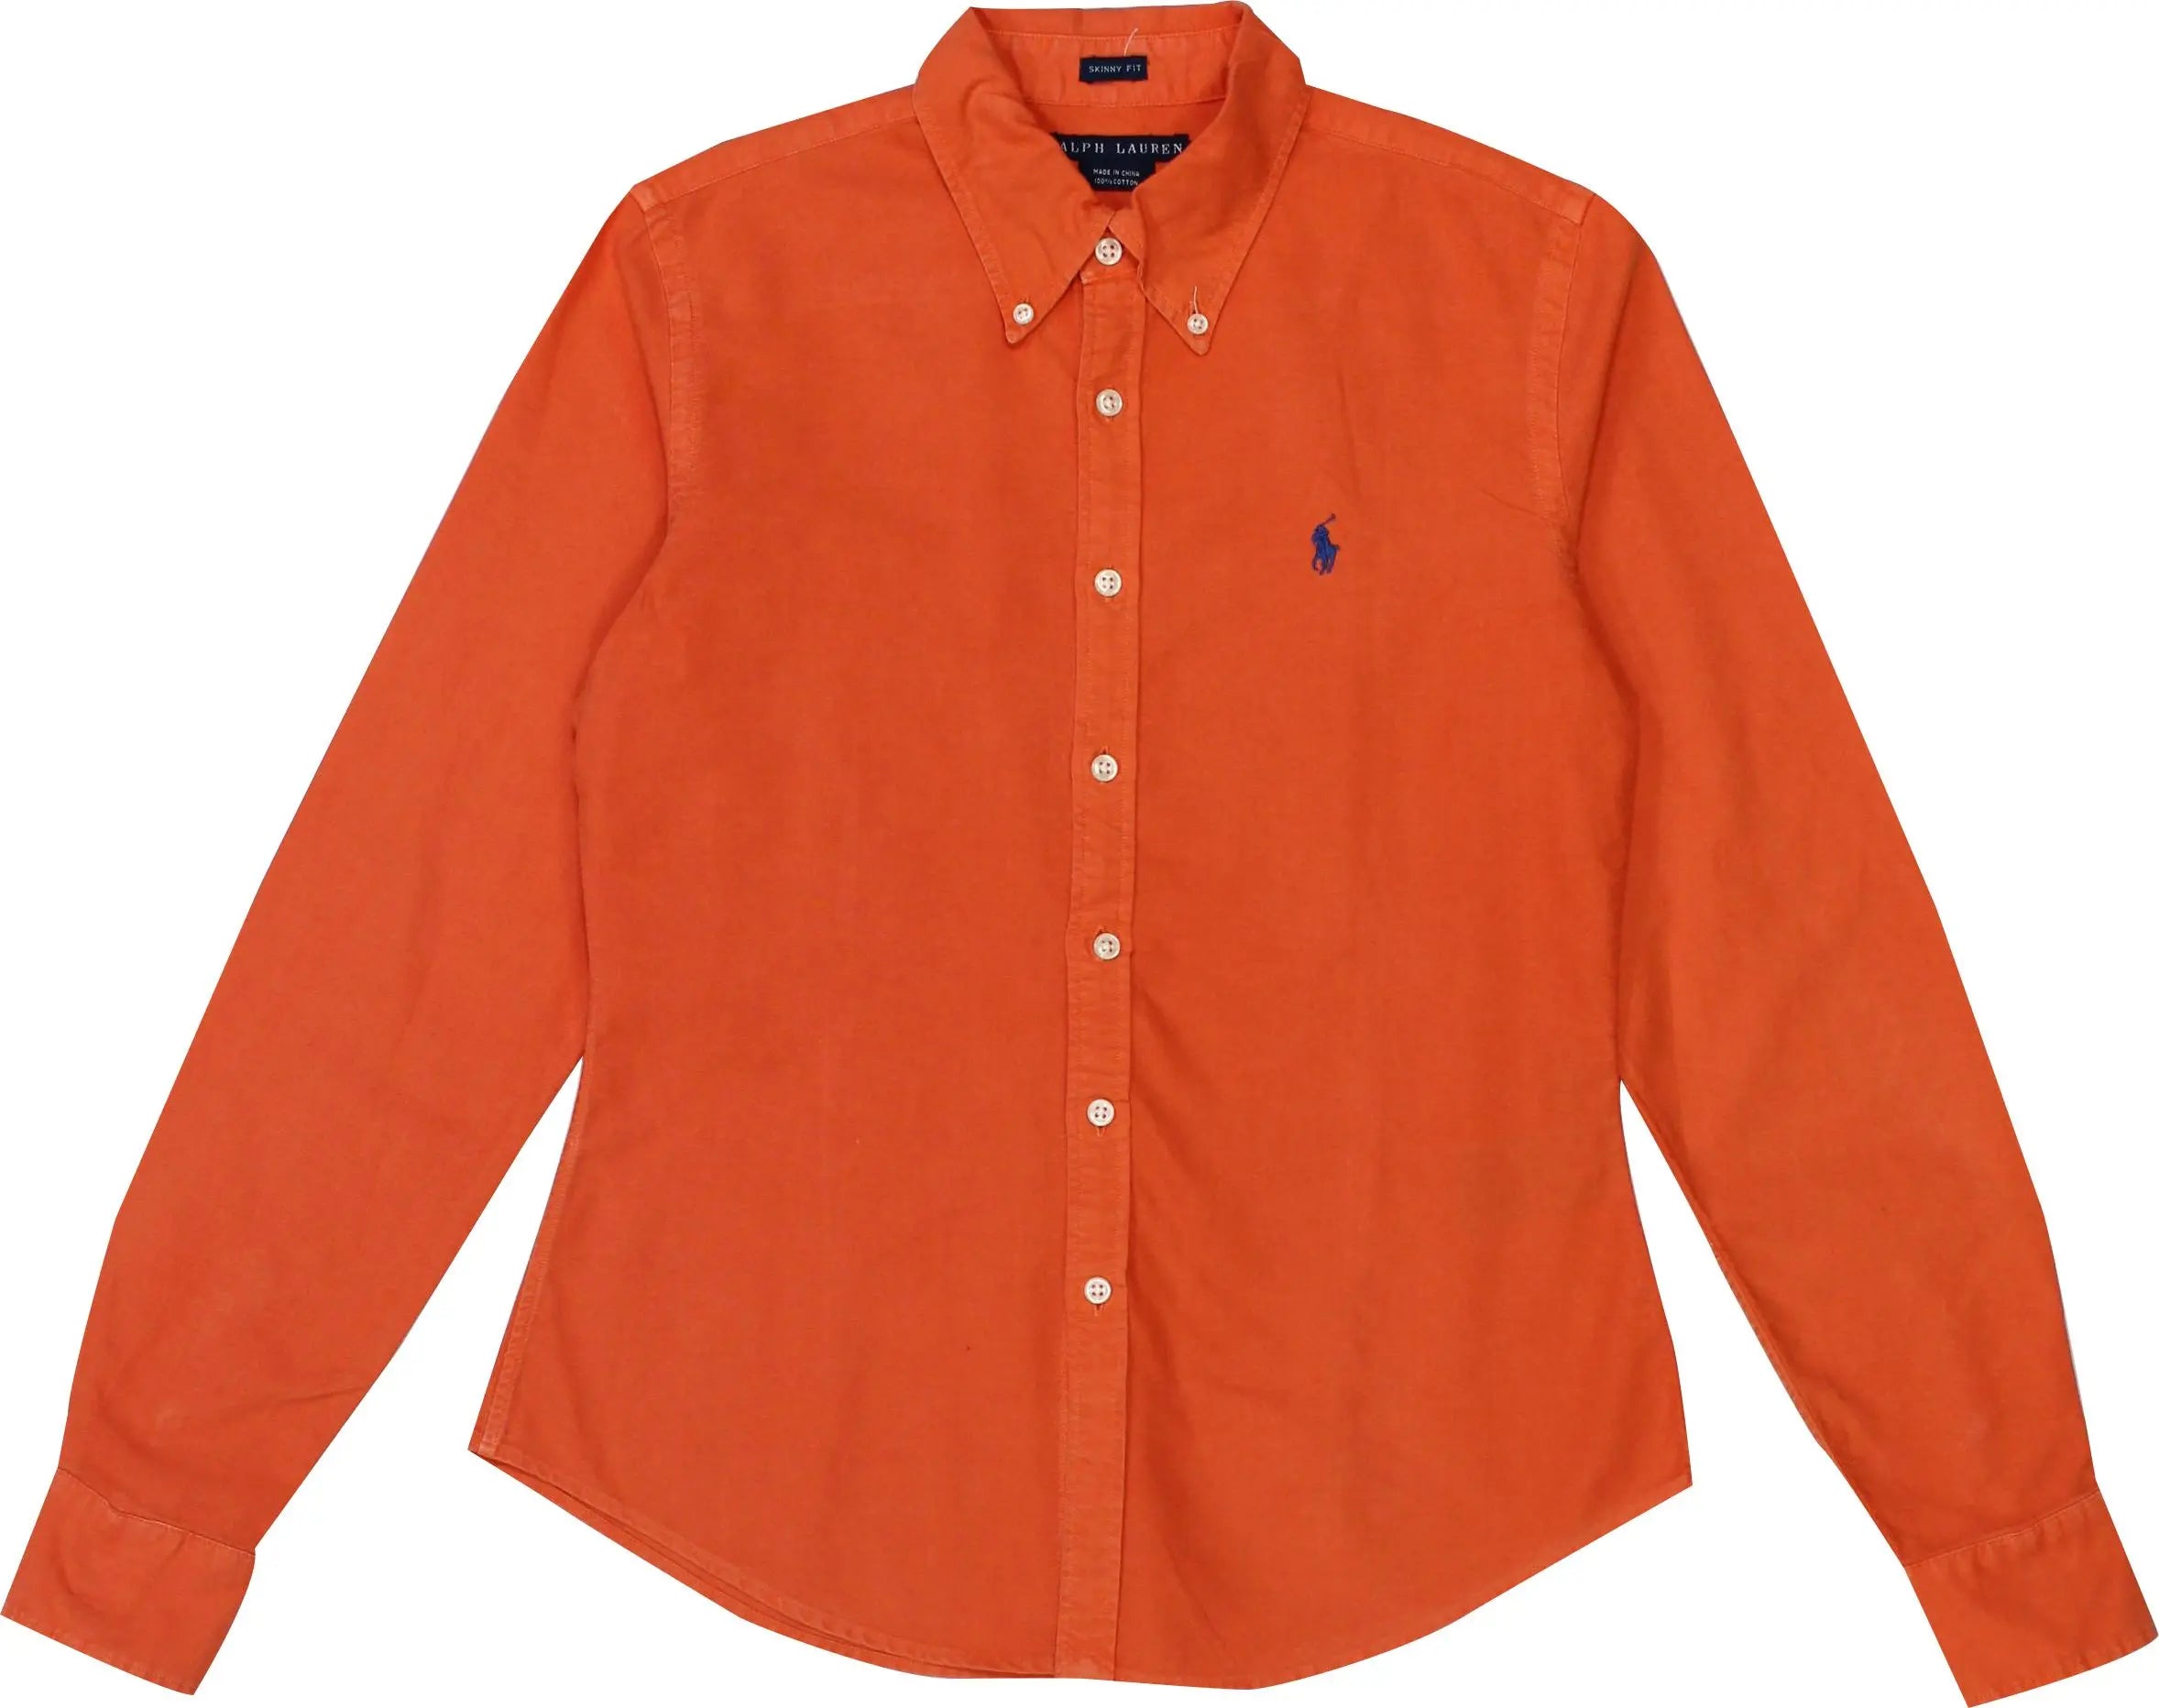 Ralph Lauren - Skinny Fit Orange Blouse by Ralph Lauren- ThriftTale.com - Vintage and second handclothing